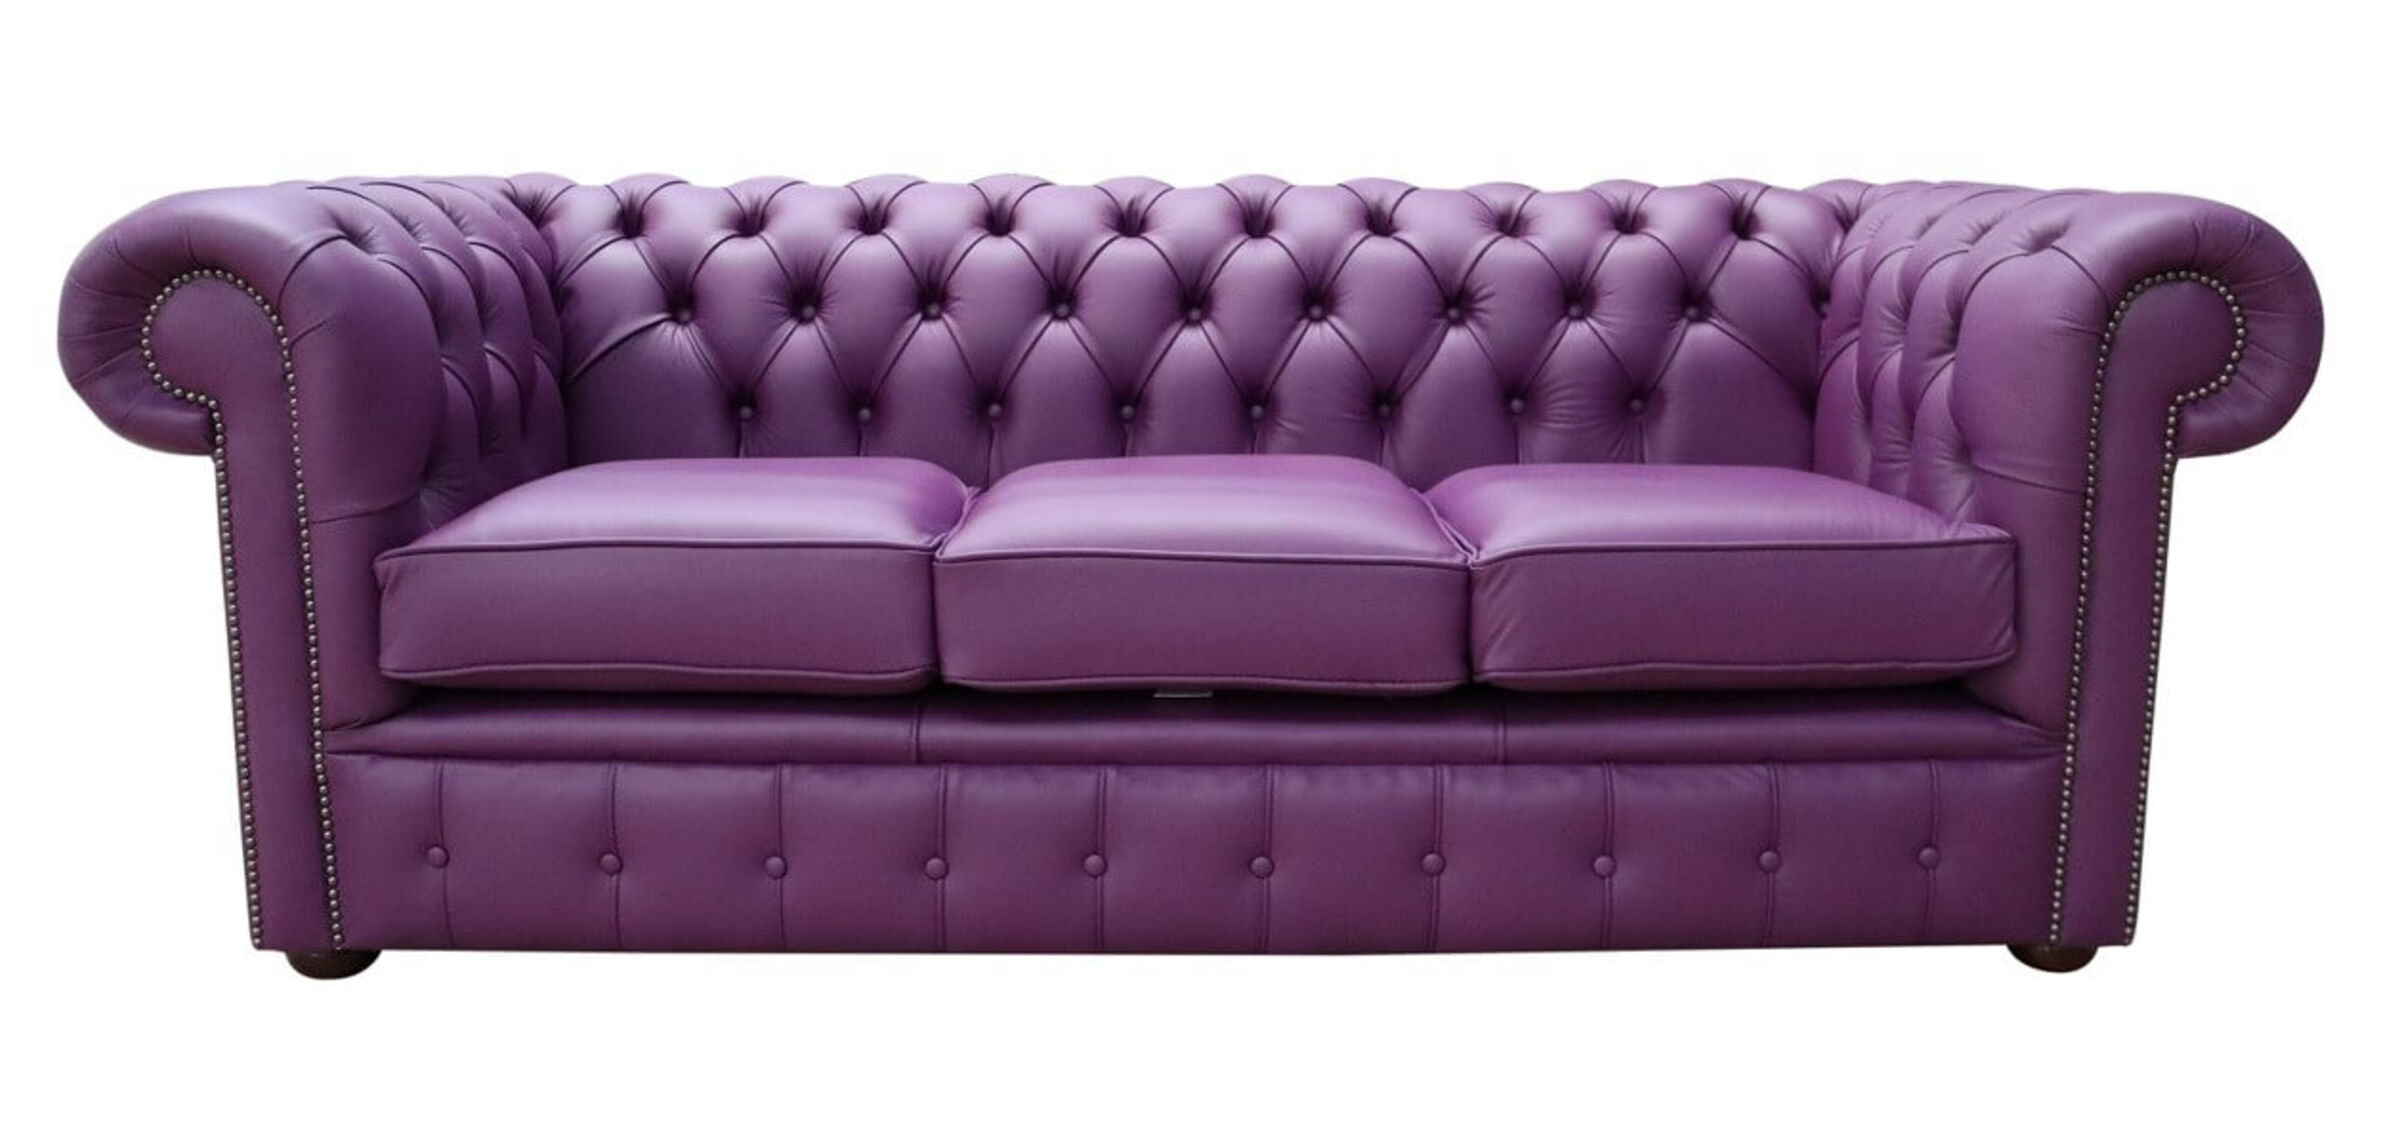 purple leather chesterfield sofa